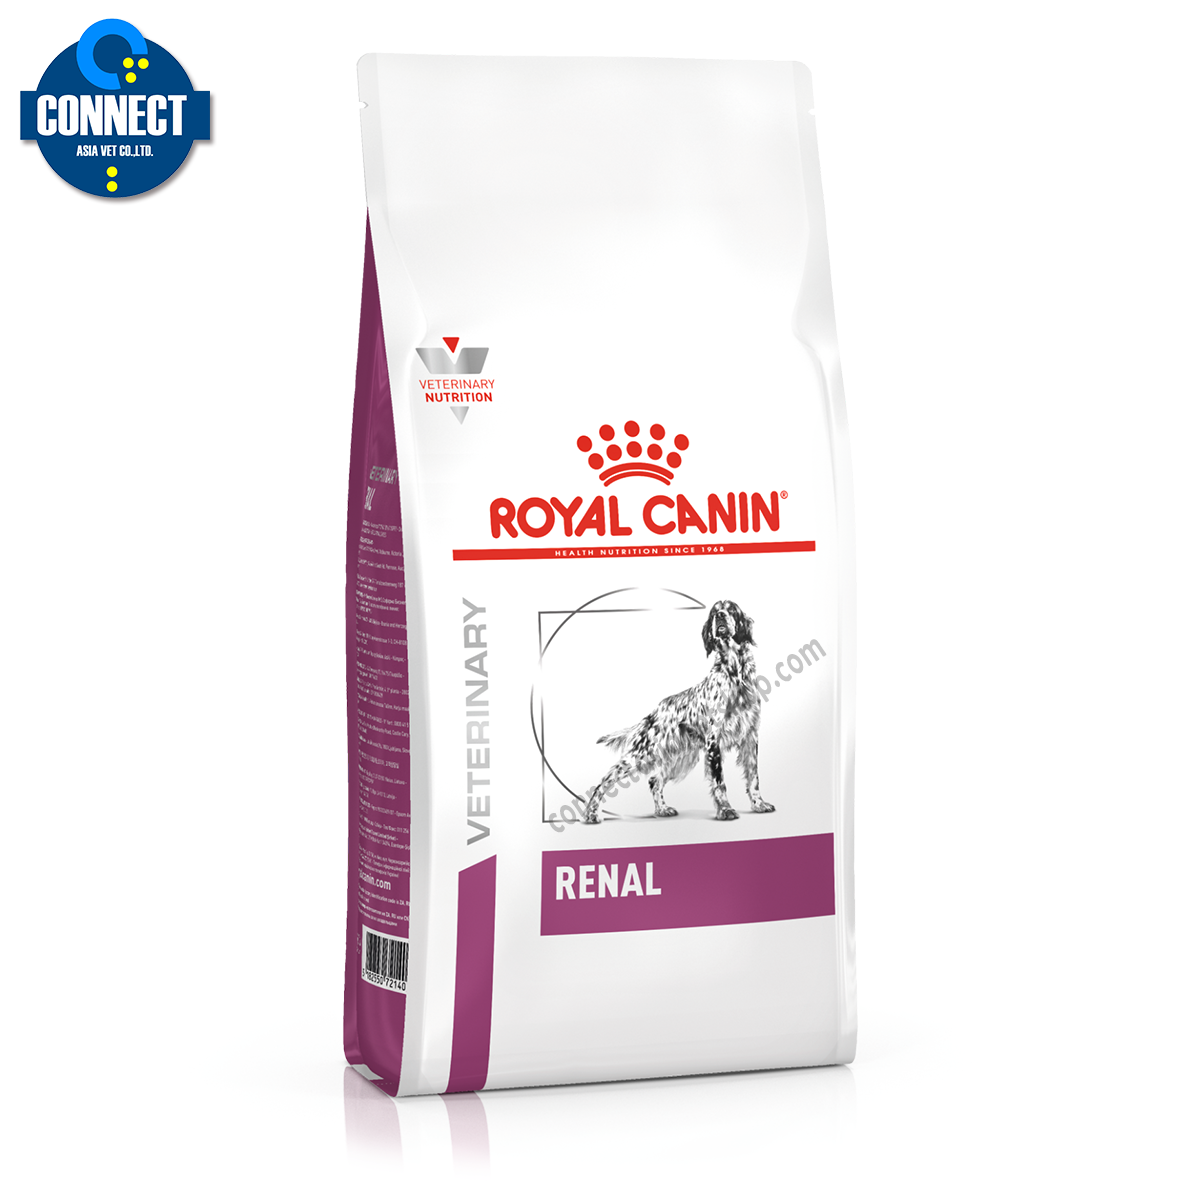 Royal Canin RENAL ขนาดถุง ( 2 kg , 7 kg , 14 kg.  )